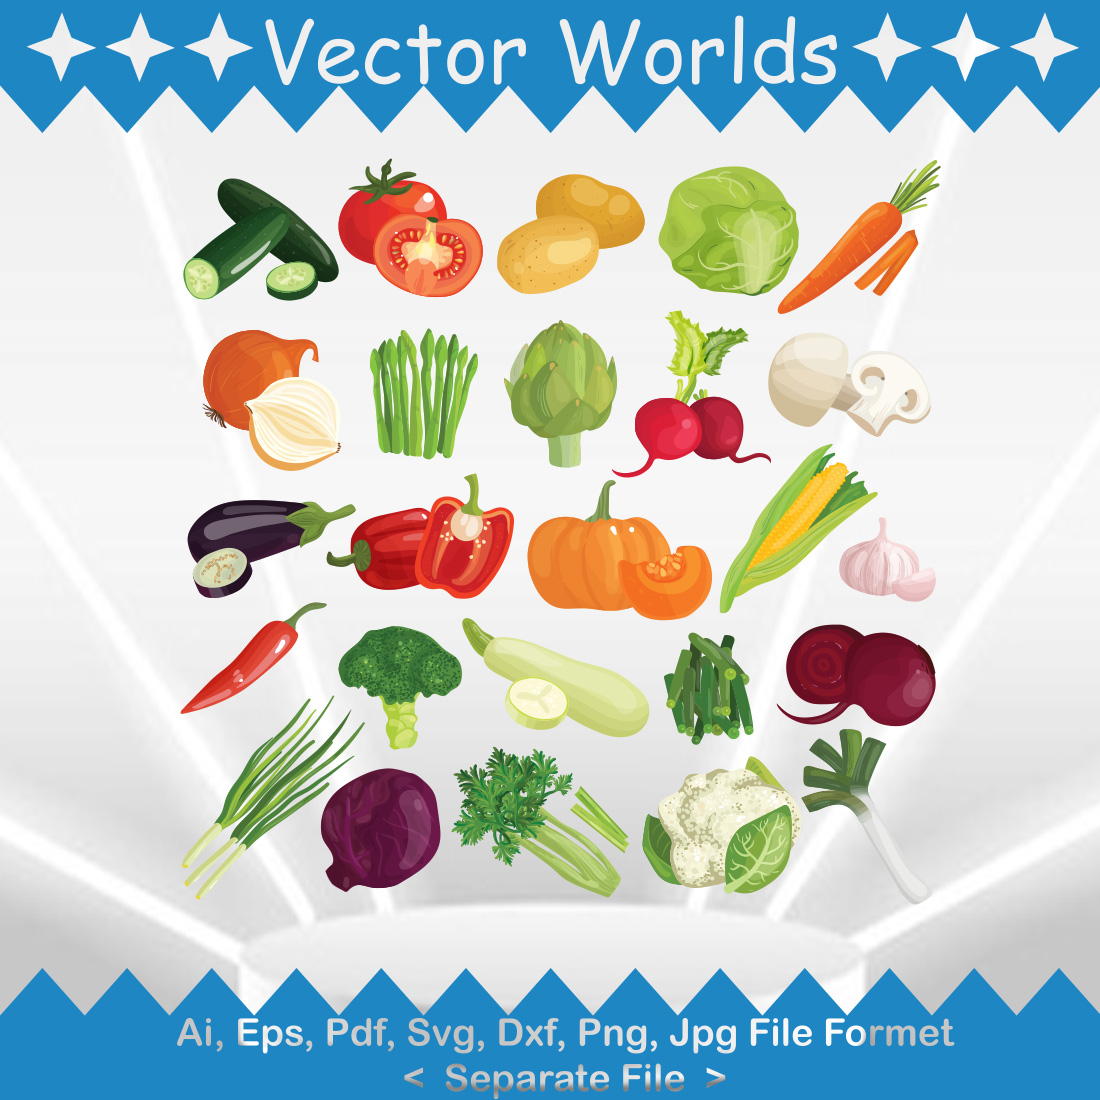 Vegetable SVG Vector Design cover image.